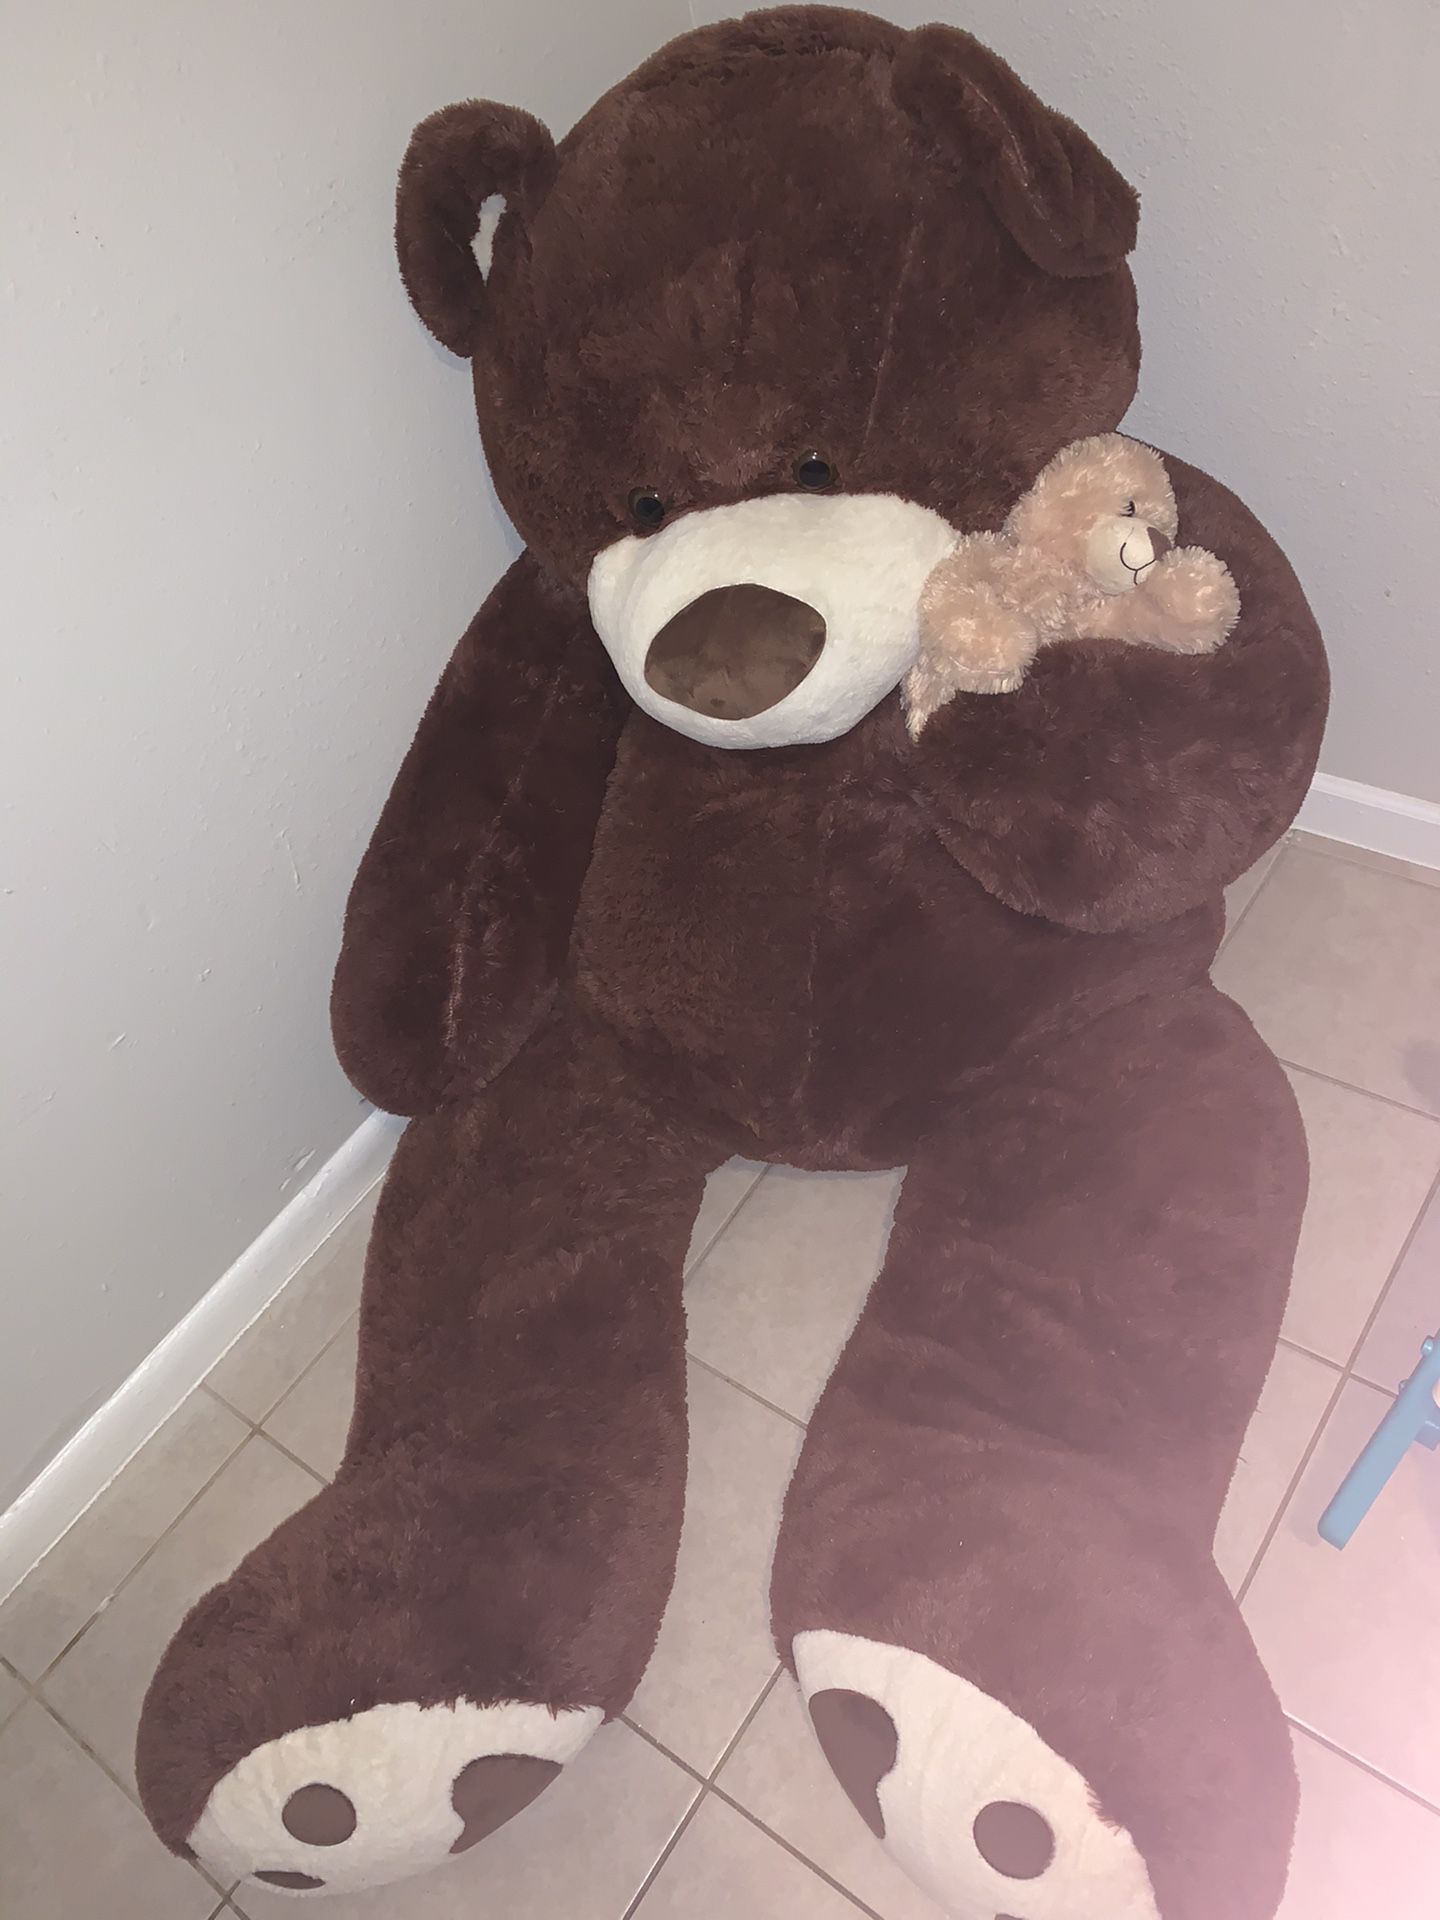 HUGE teddy bear